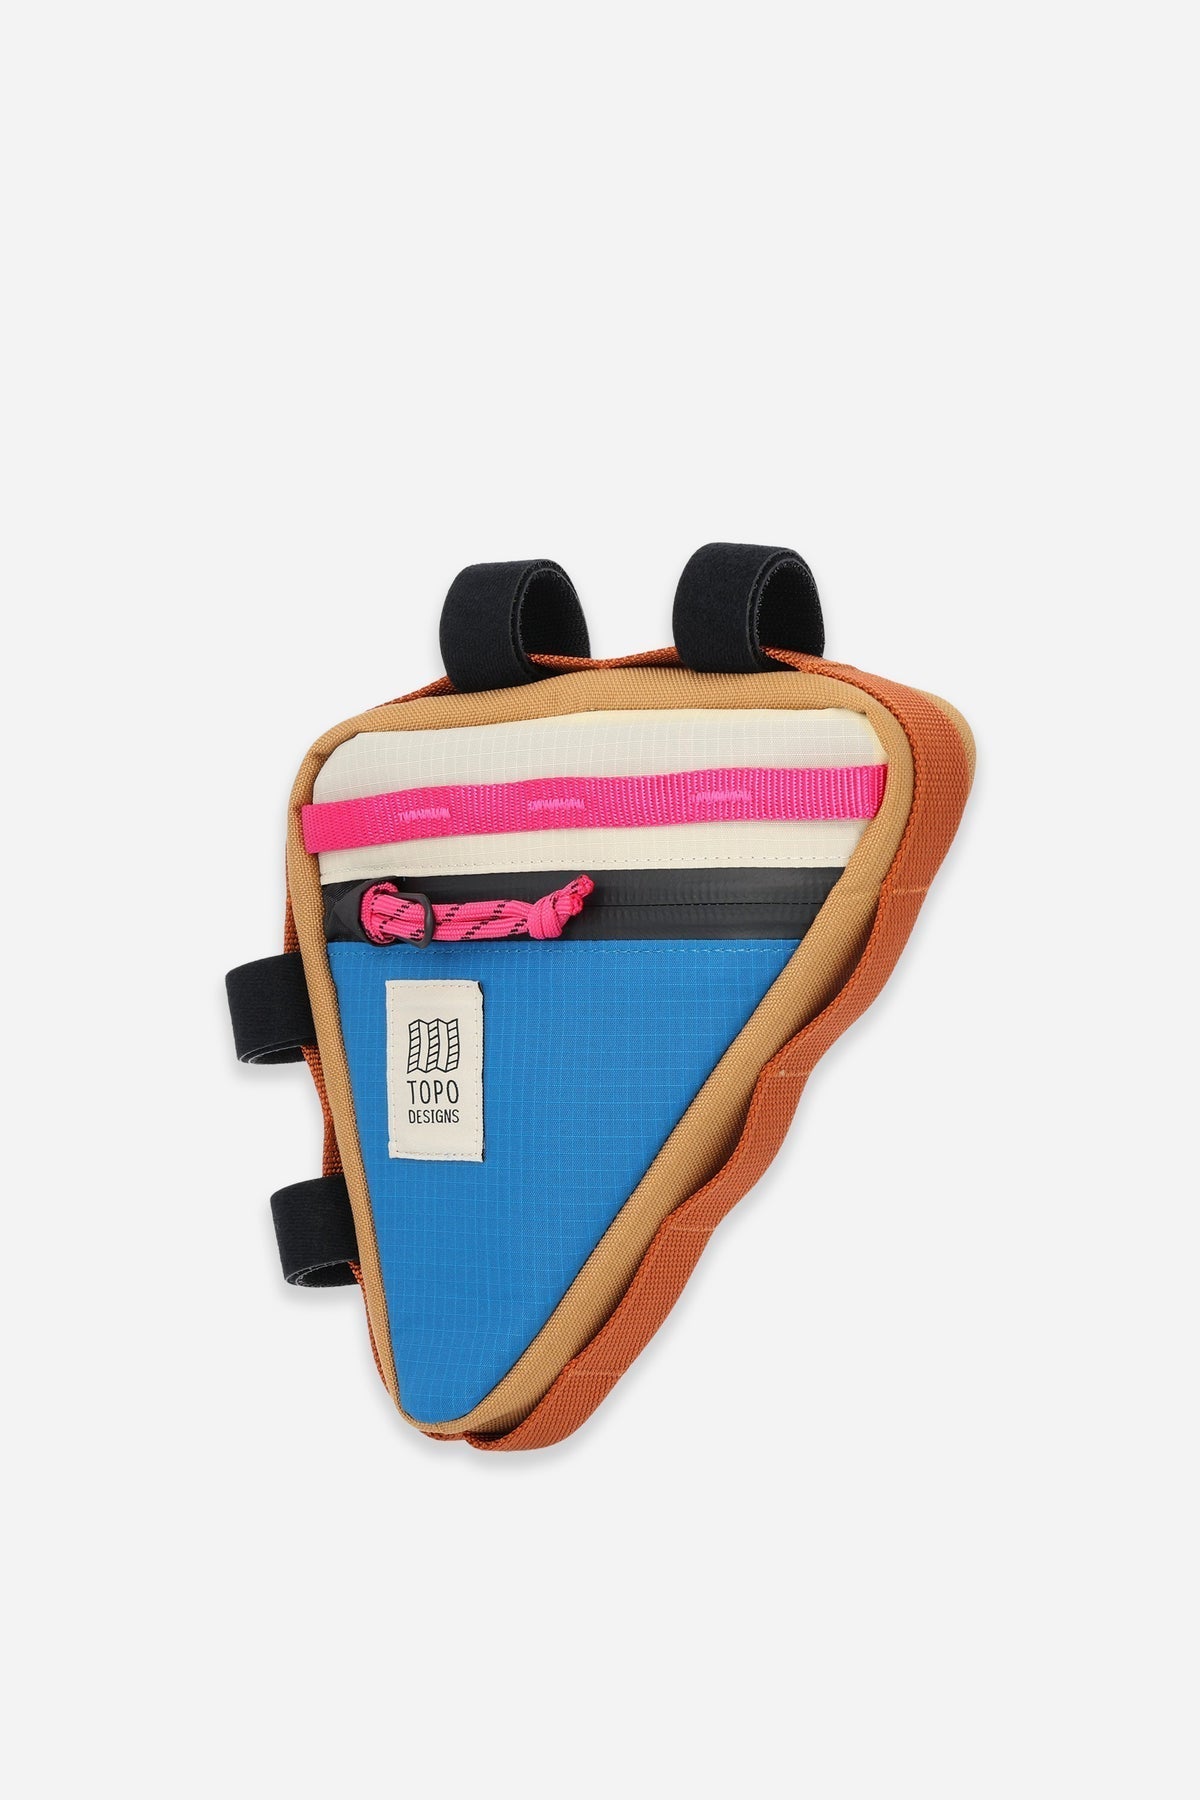 Topo Designs Frame Bag